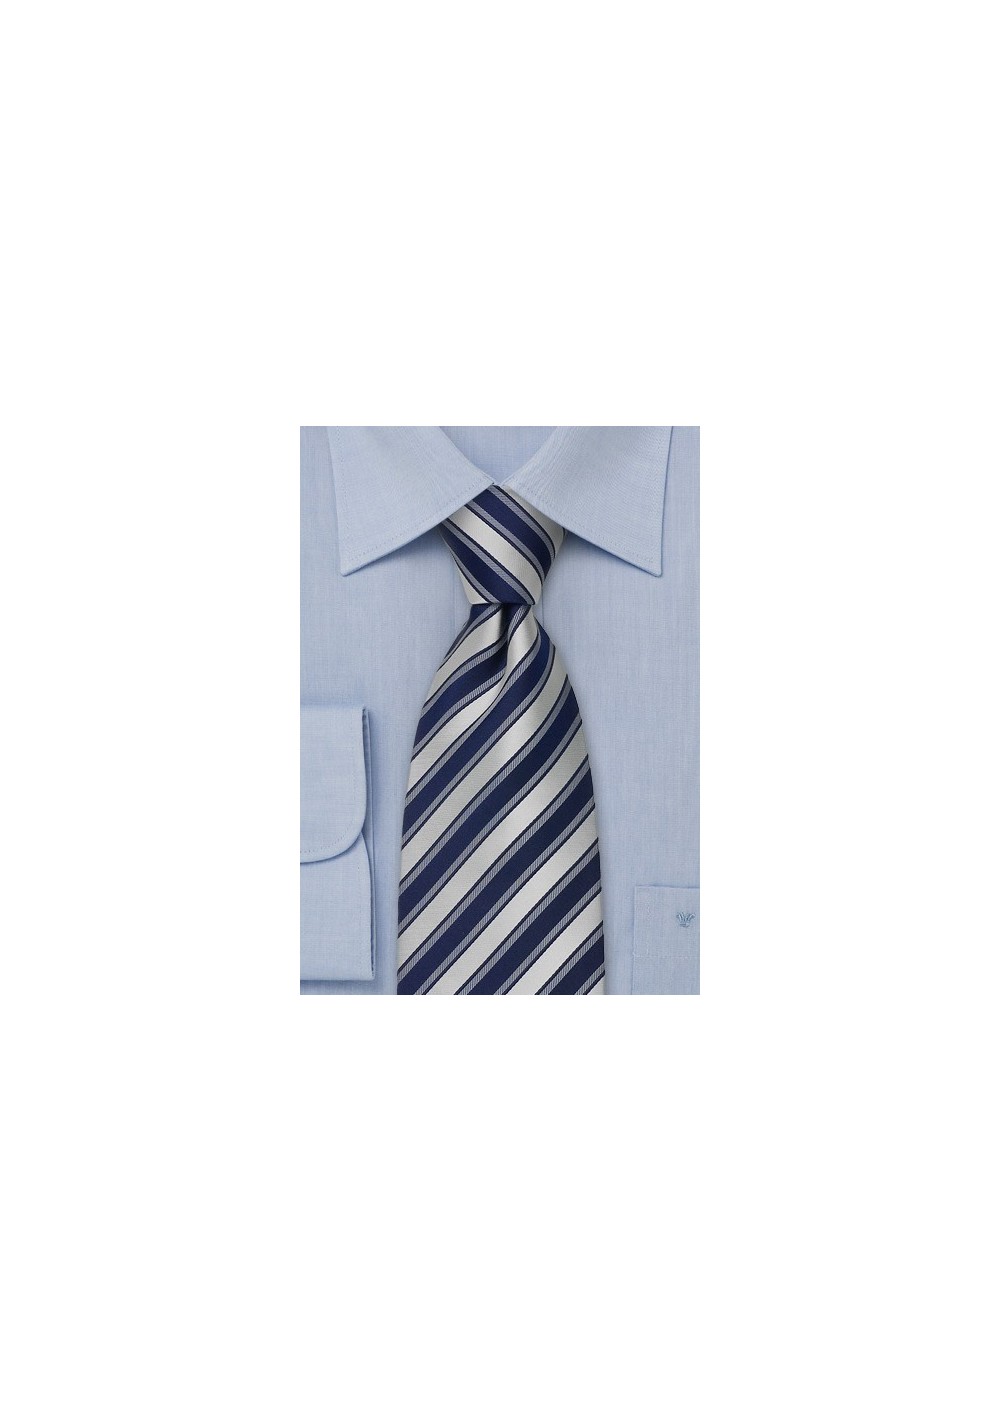 Modern Striped Neckties - Striped Tie "Verona" by Parsley